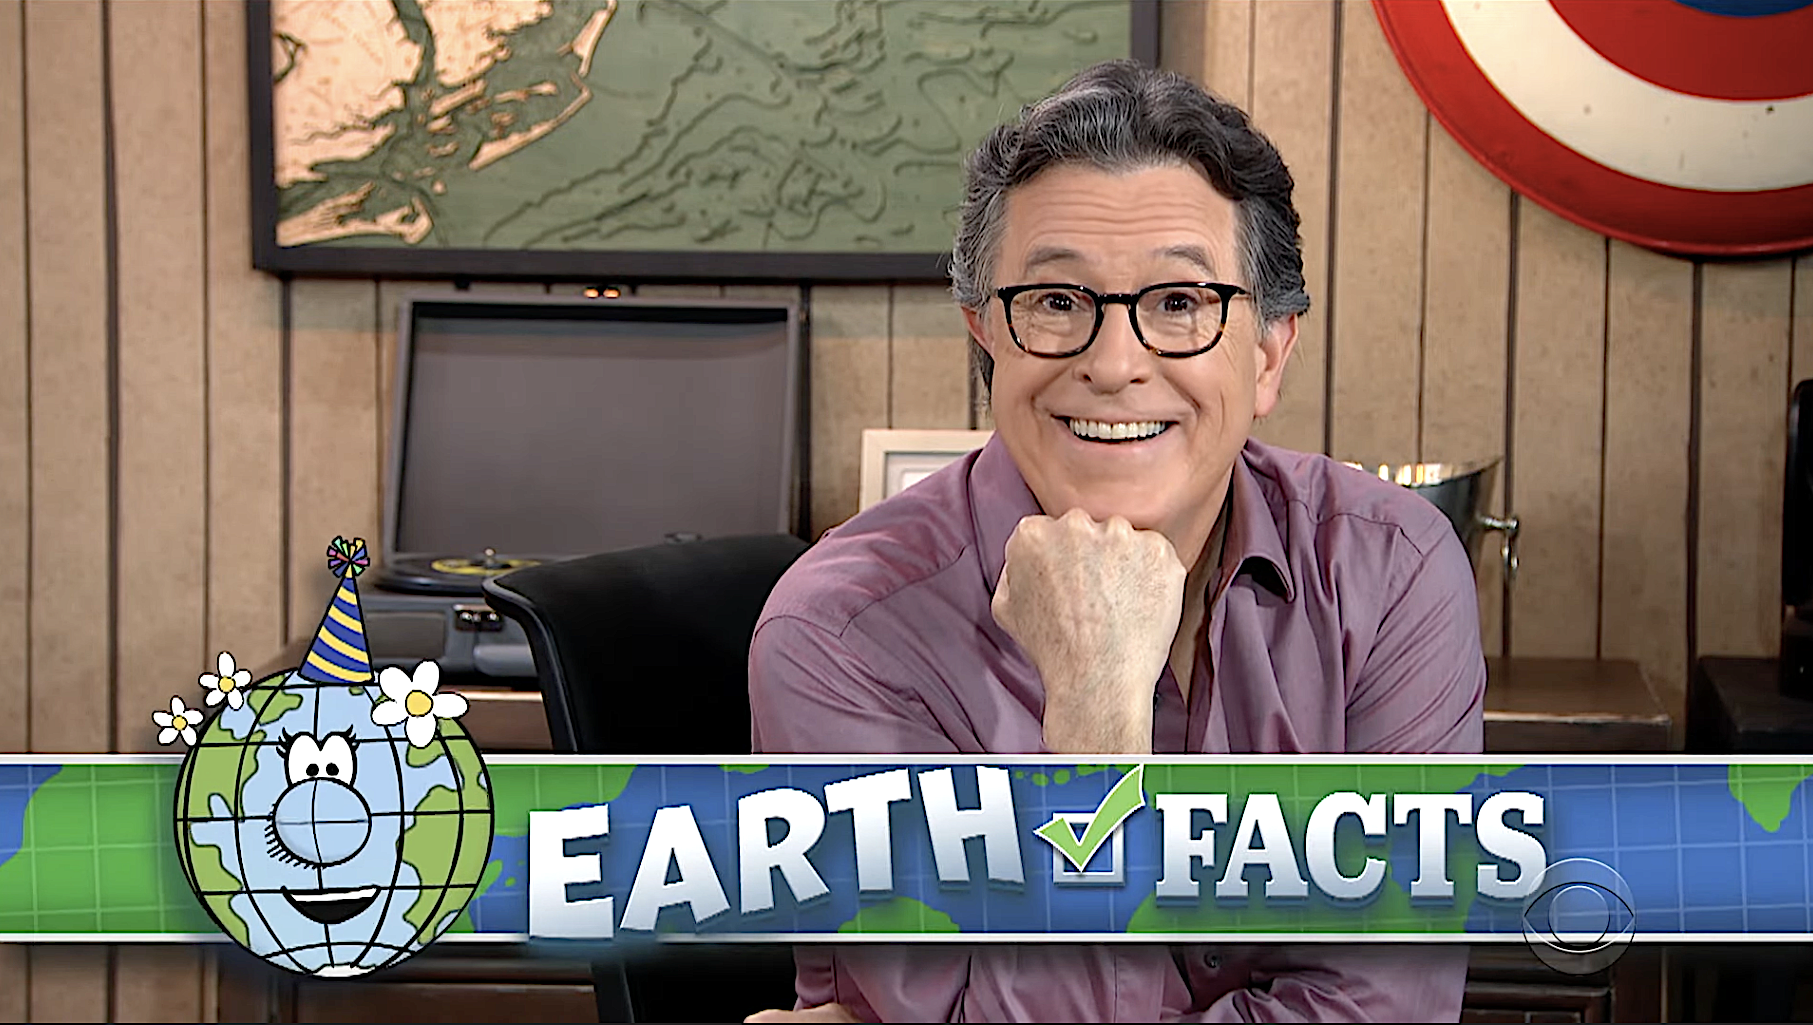 Stephen Colbert celebrates Earth Day